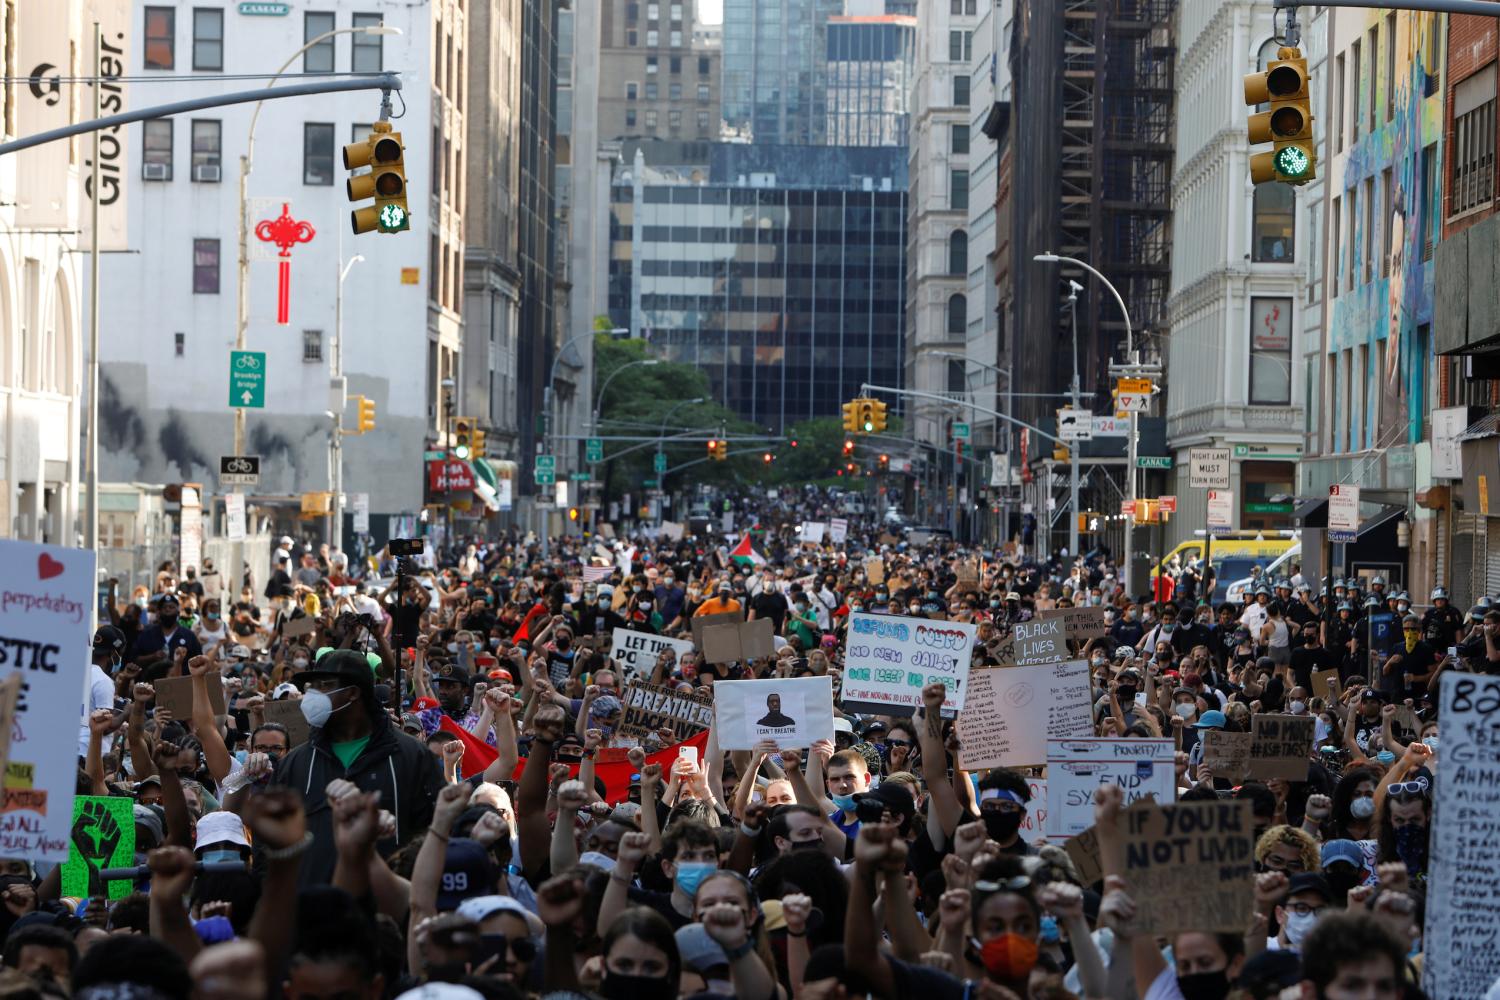 Protestors march against the death in Minneapolis police custody of George Floyd in lower Manhattan in New York City, New York, U.S., June 4, 2020. REUTERS/Andrew Kelly